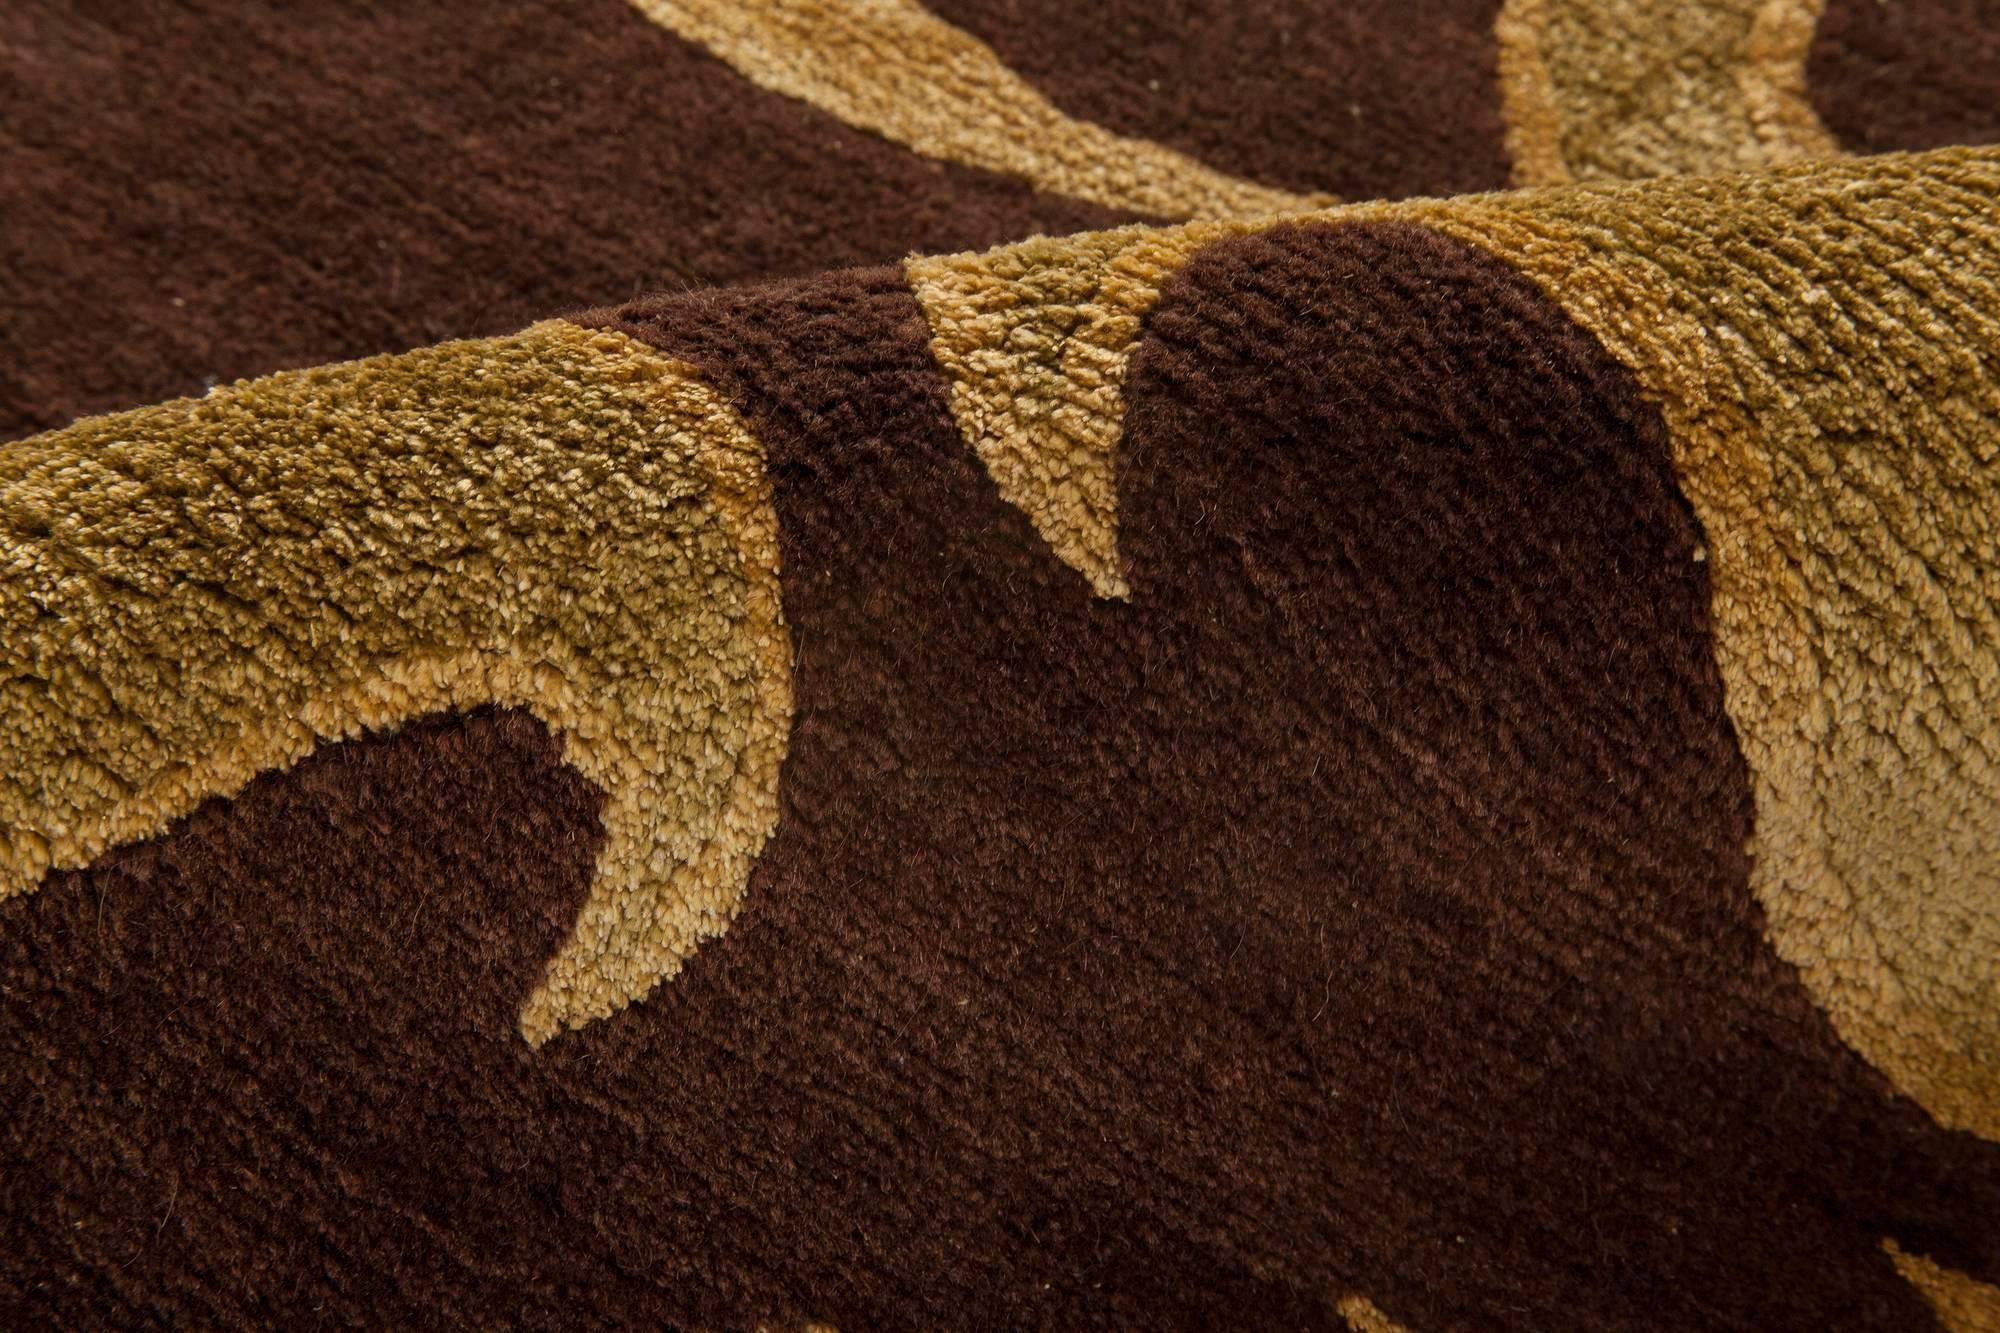 European inspired gold and brown handmade wool rug by Doris Leslie Blau
Size: 8'1